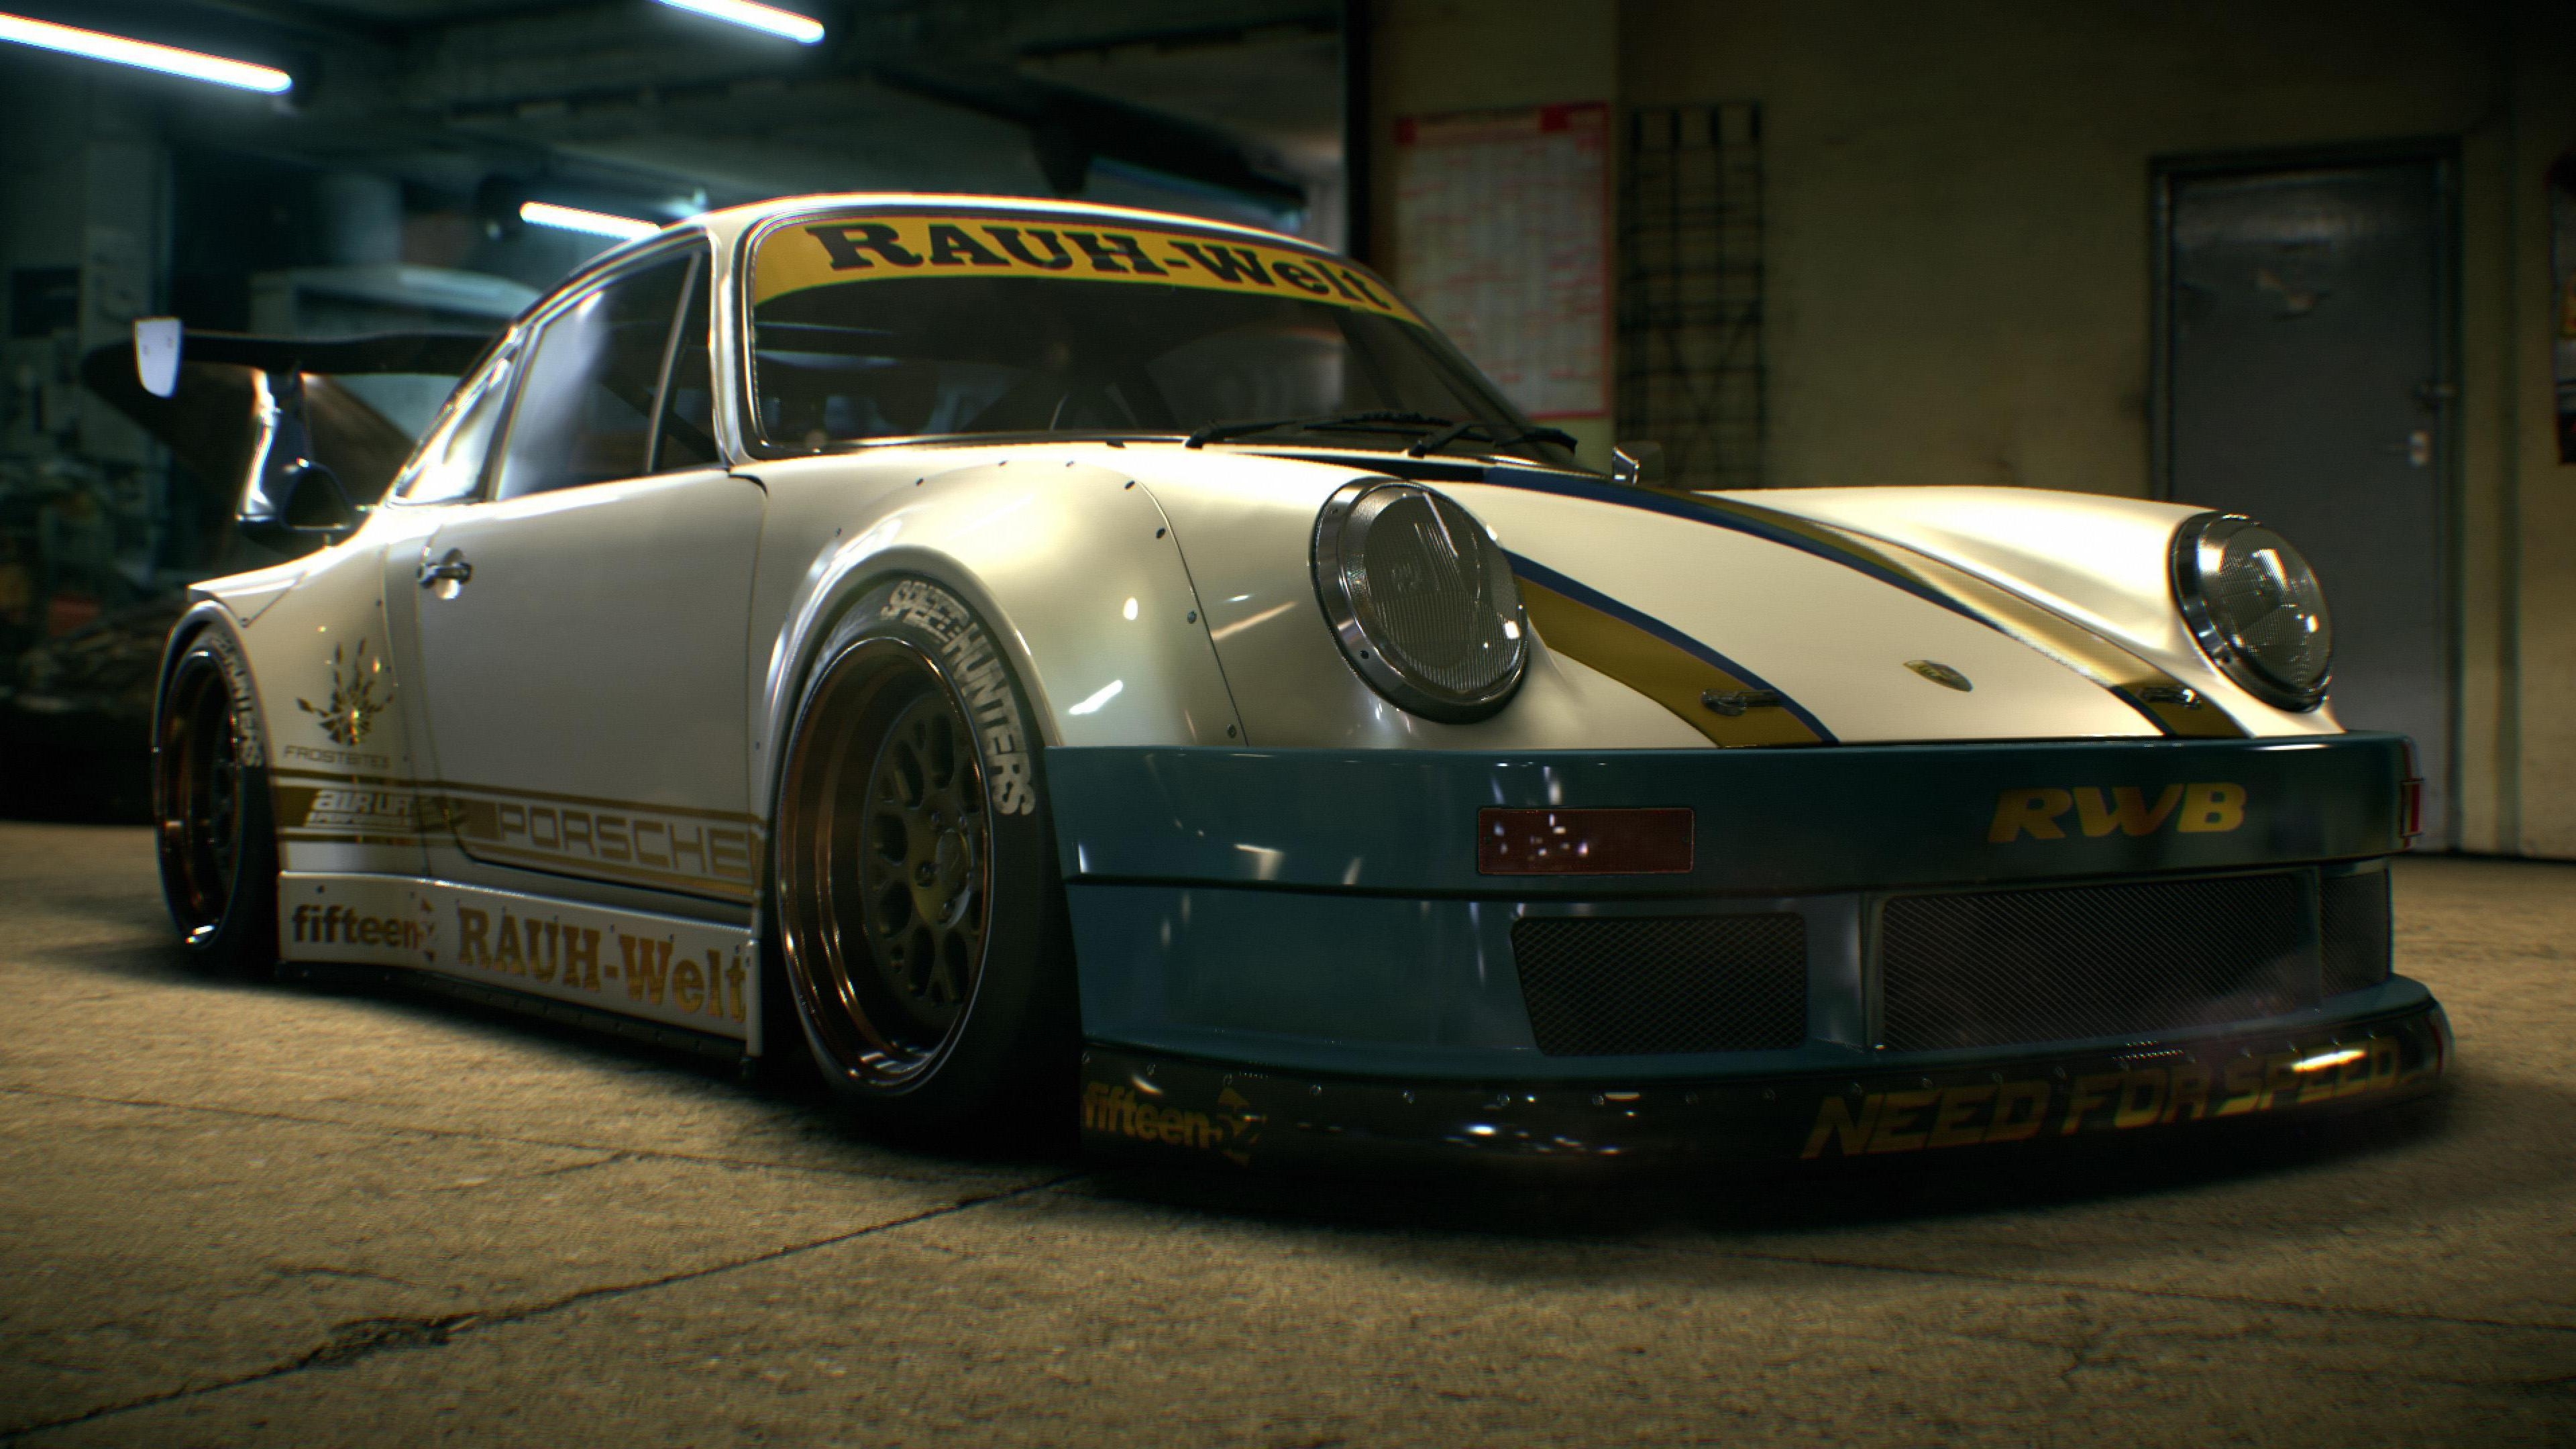 Need For Speed Porsche Rauh-Welt for 3840 x 2160 Ultra HD resolution